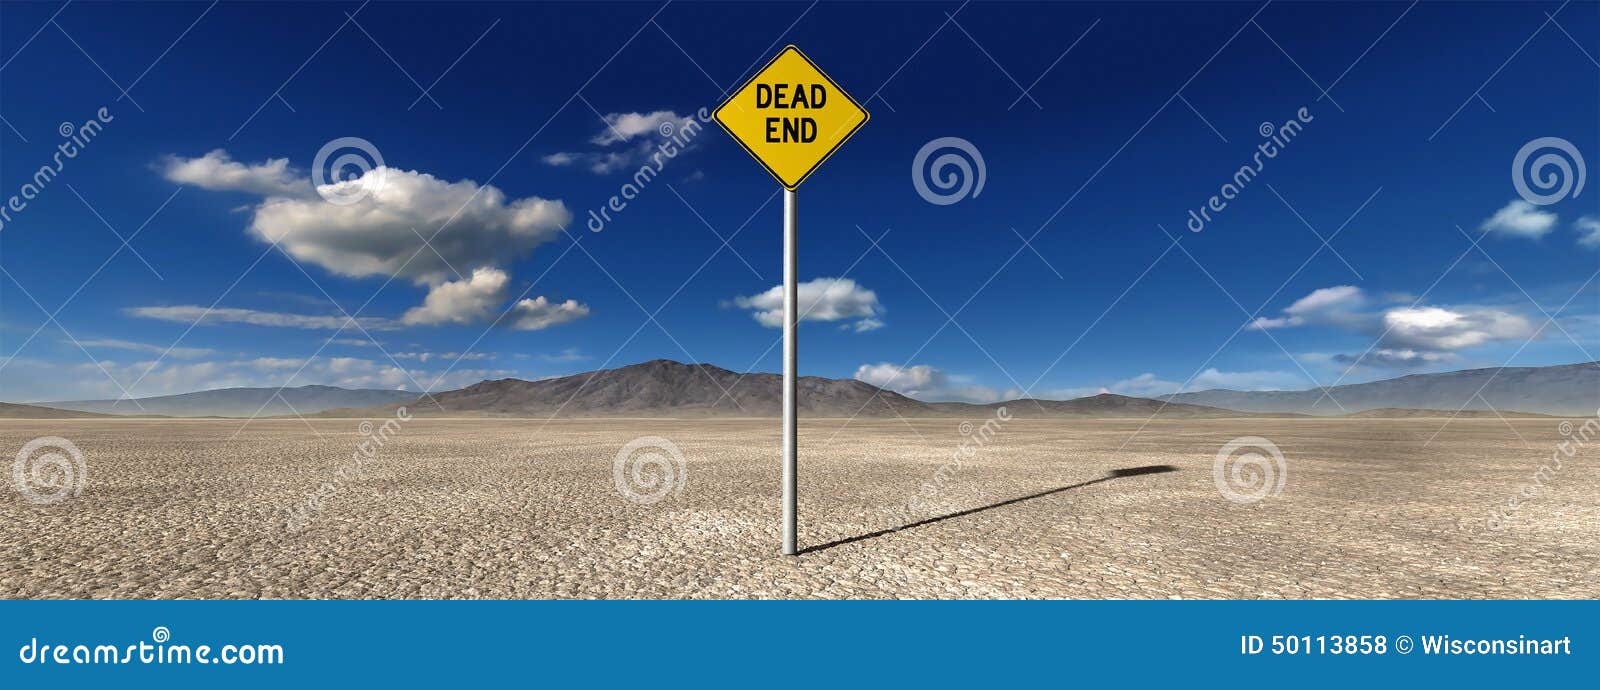 desolate desert dead end 